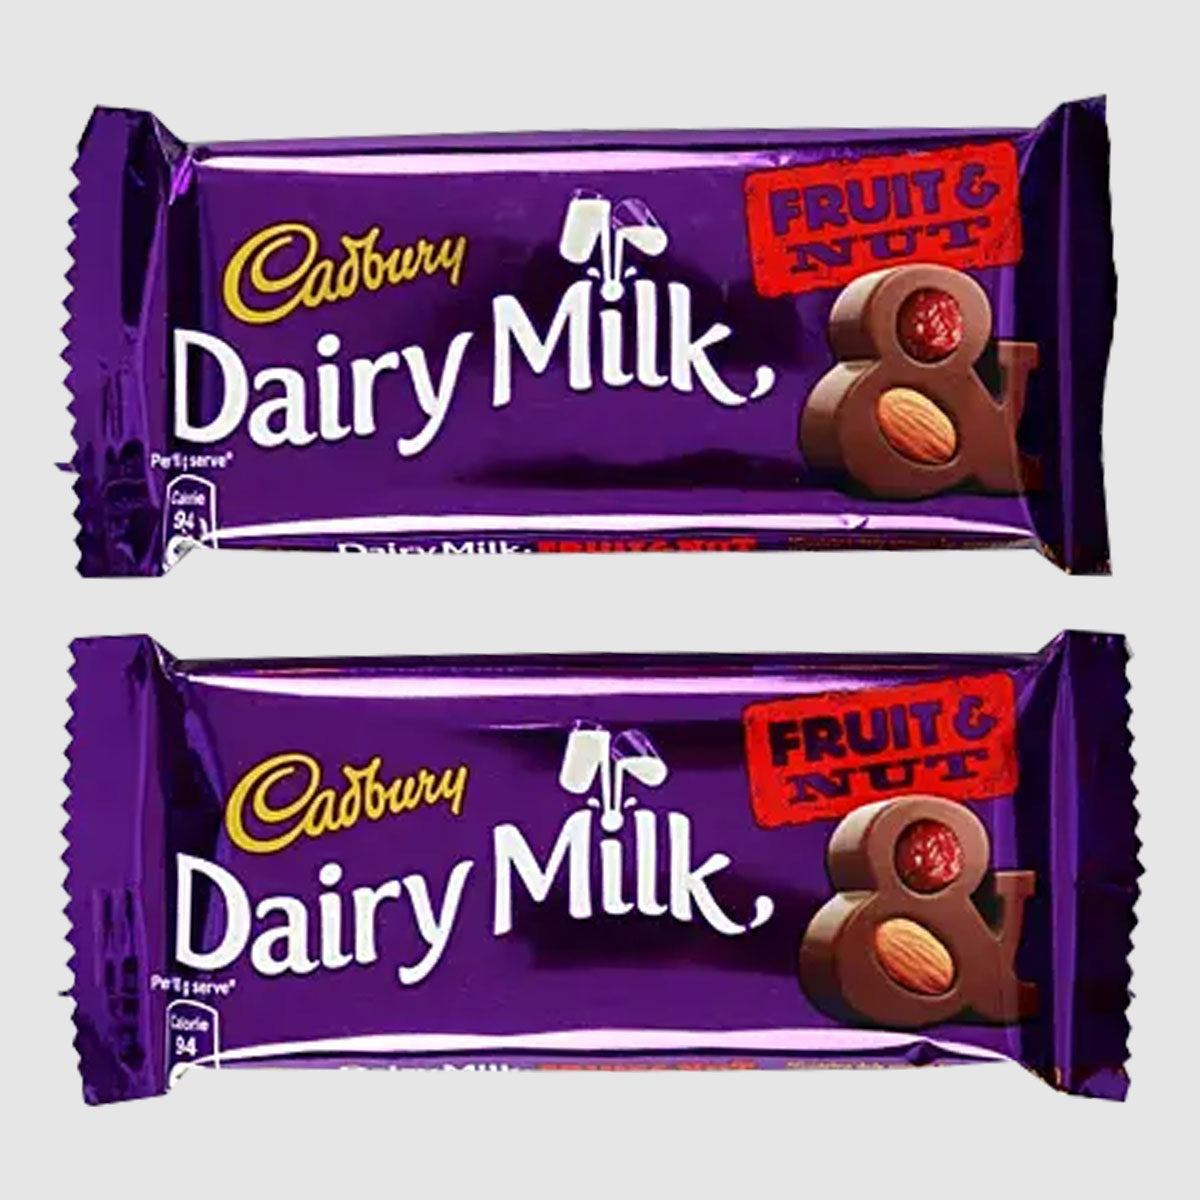 I Love You More Than Chocolate Keepsake with Cadbury Dairy Milk Gift Hamper